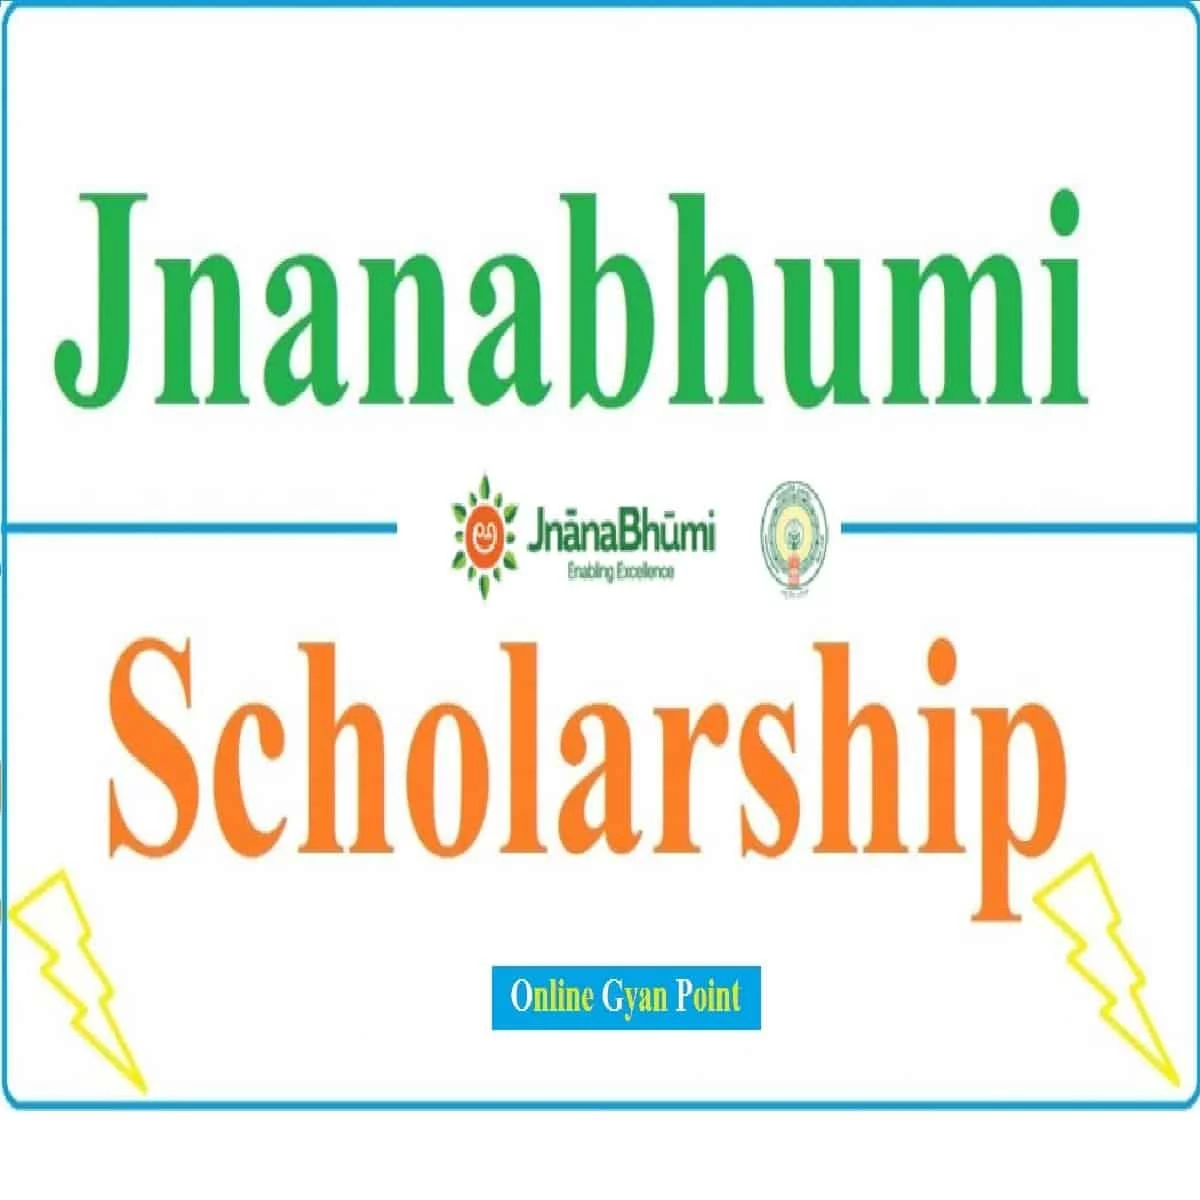 Jnanabhumi Scholarship status (1) (1)